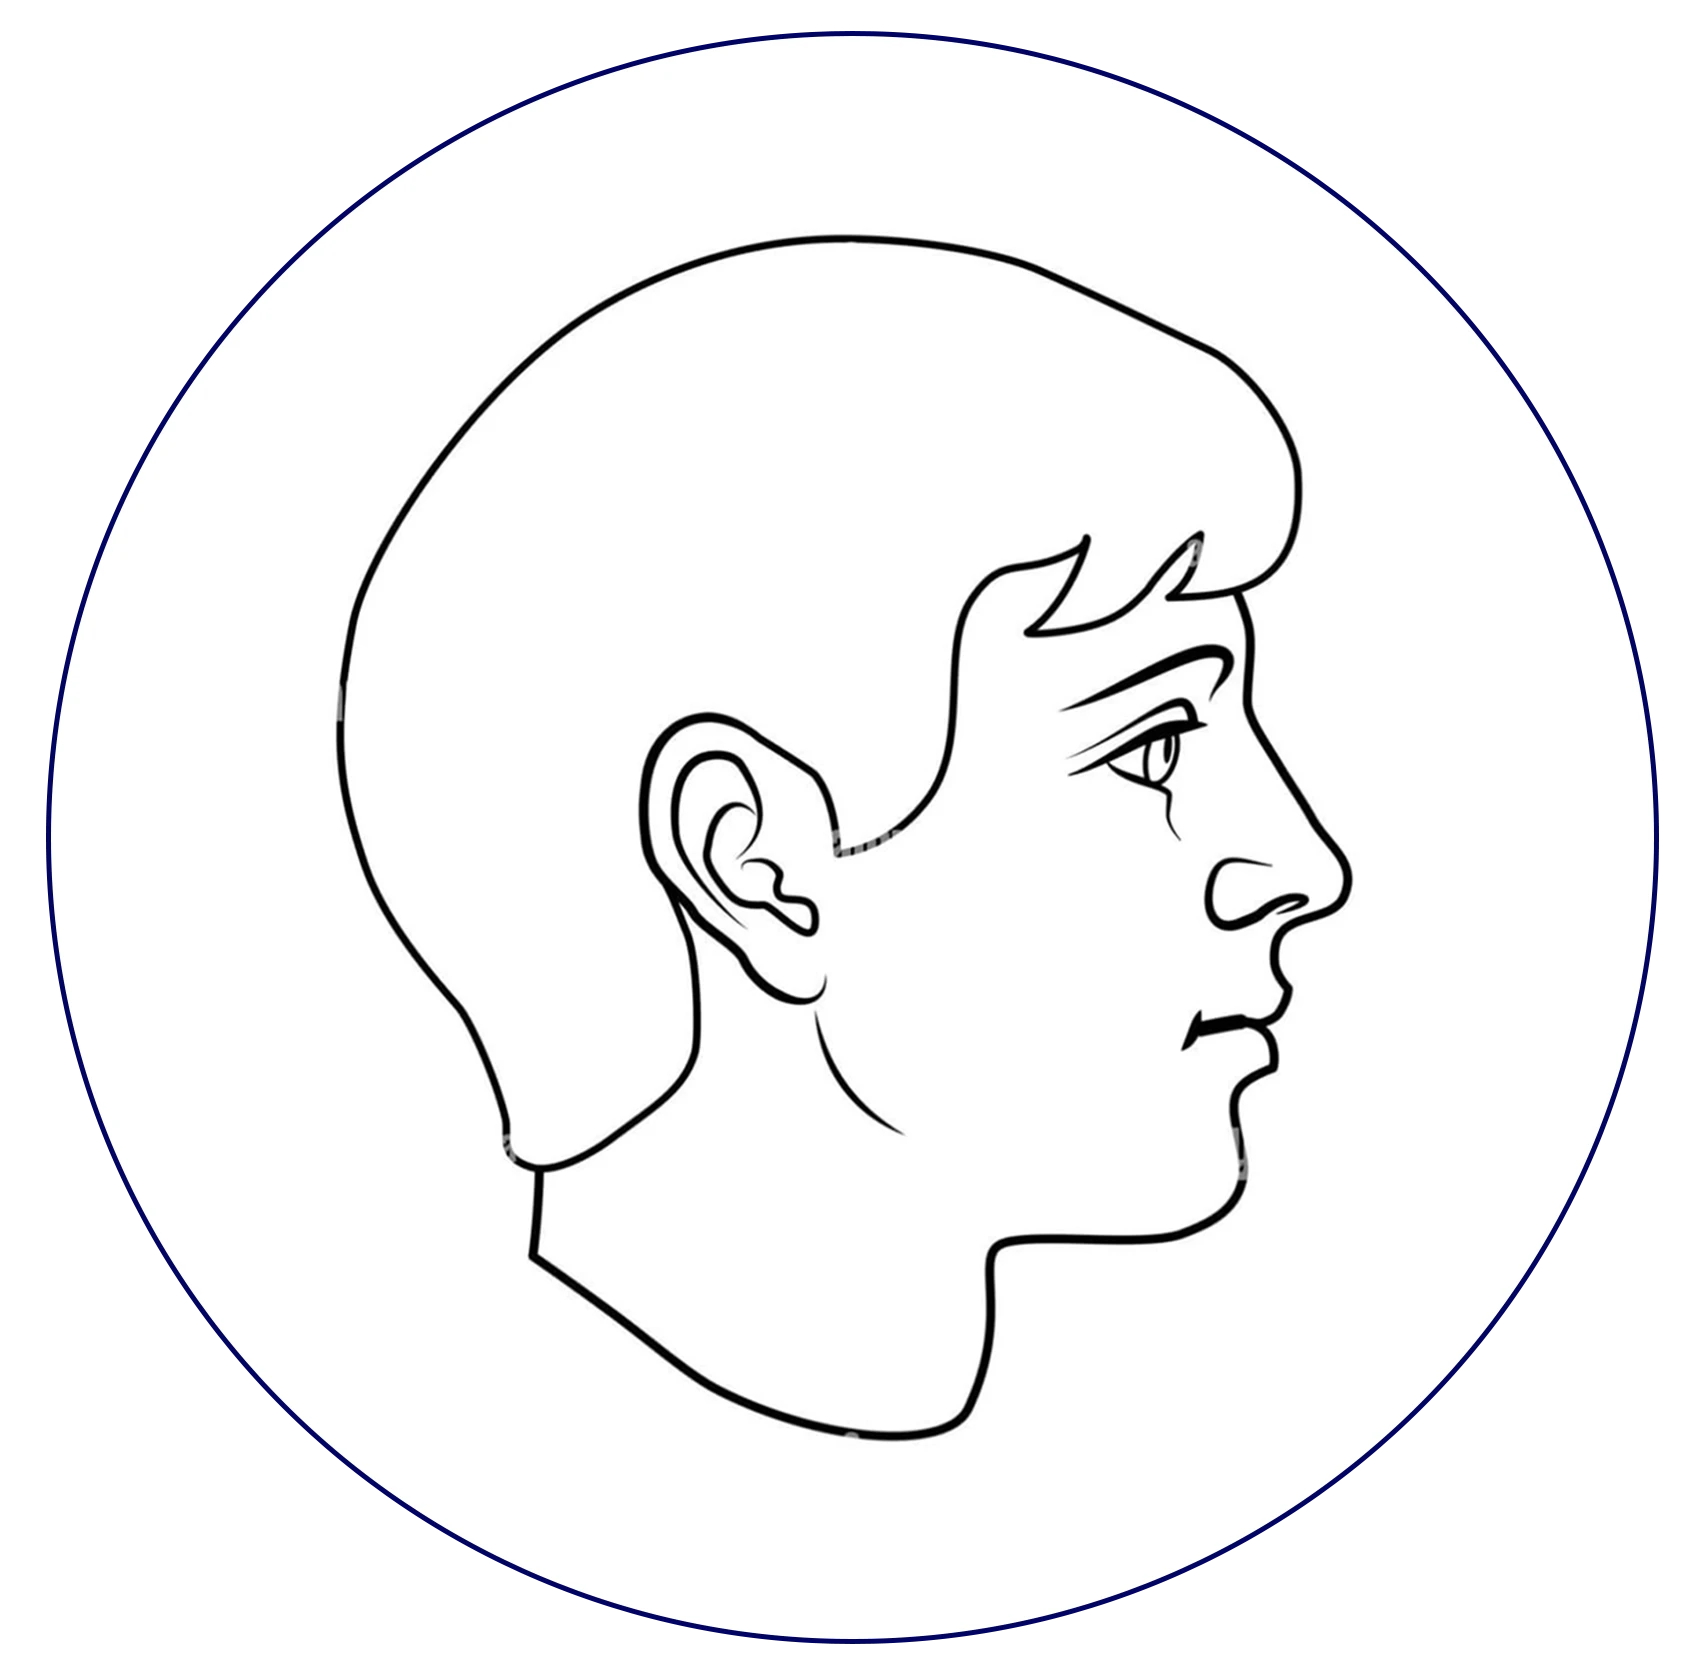 Graphic representation of head and neck cancer awareness symbol